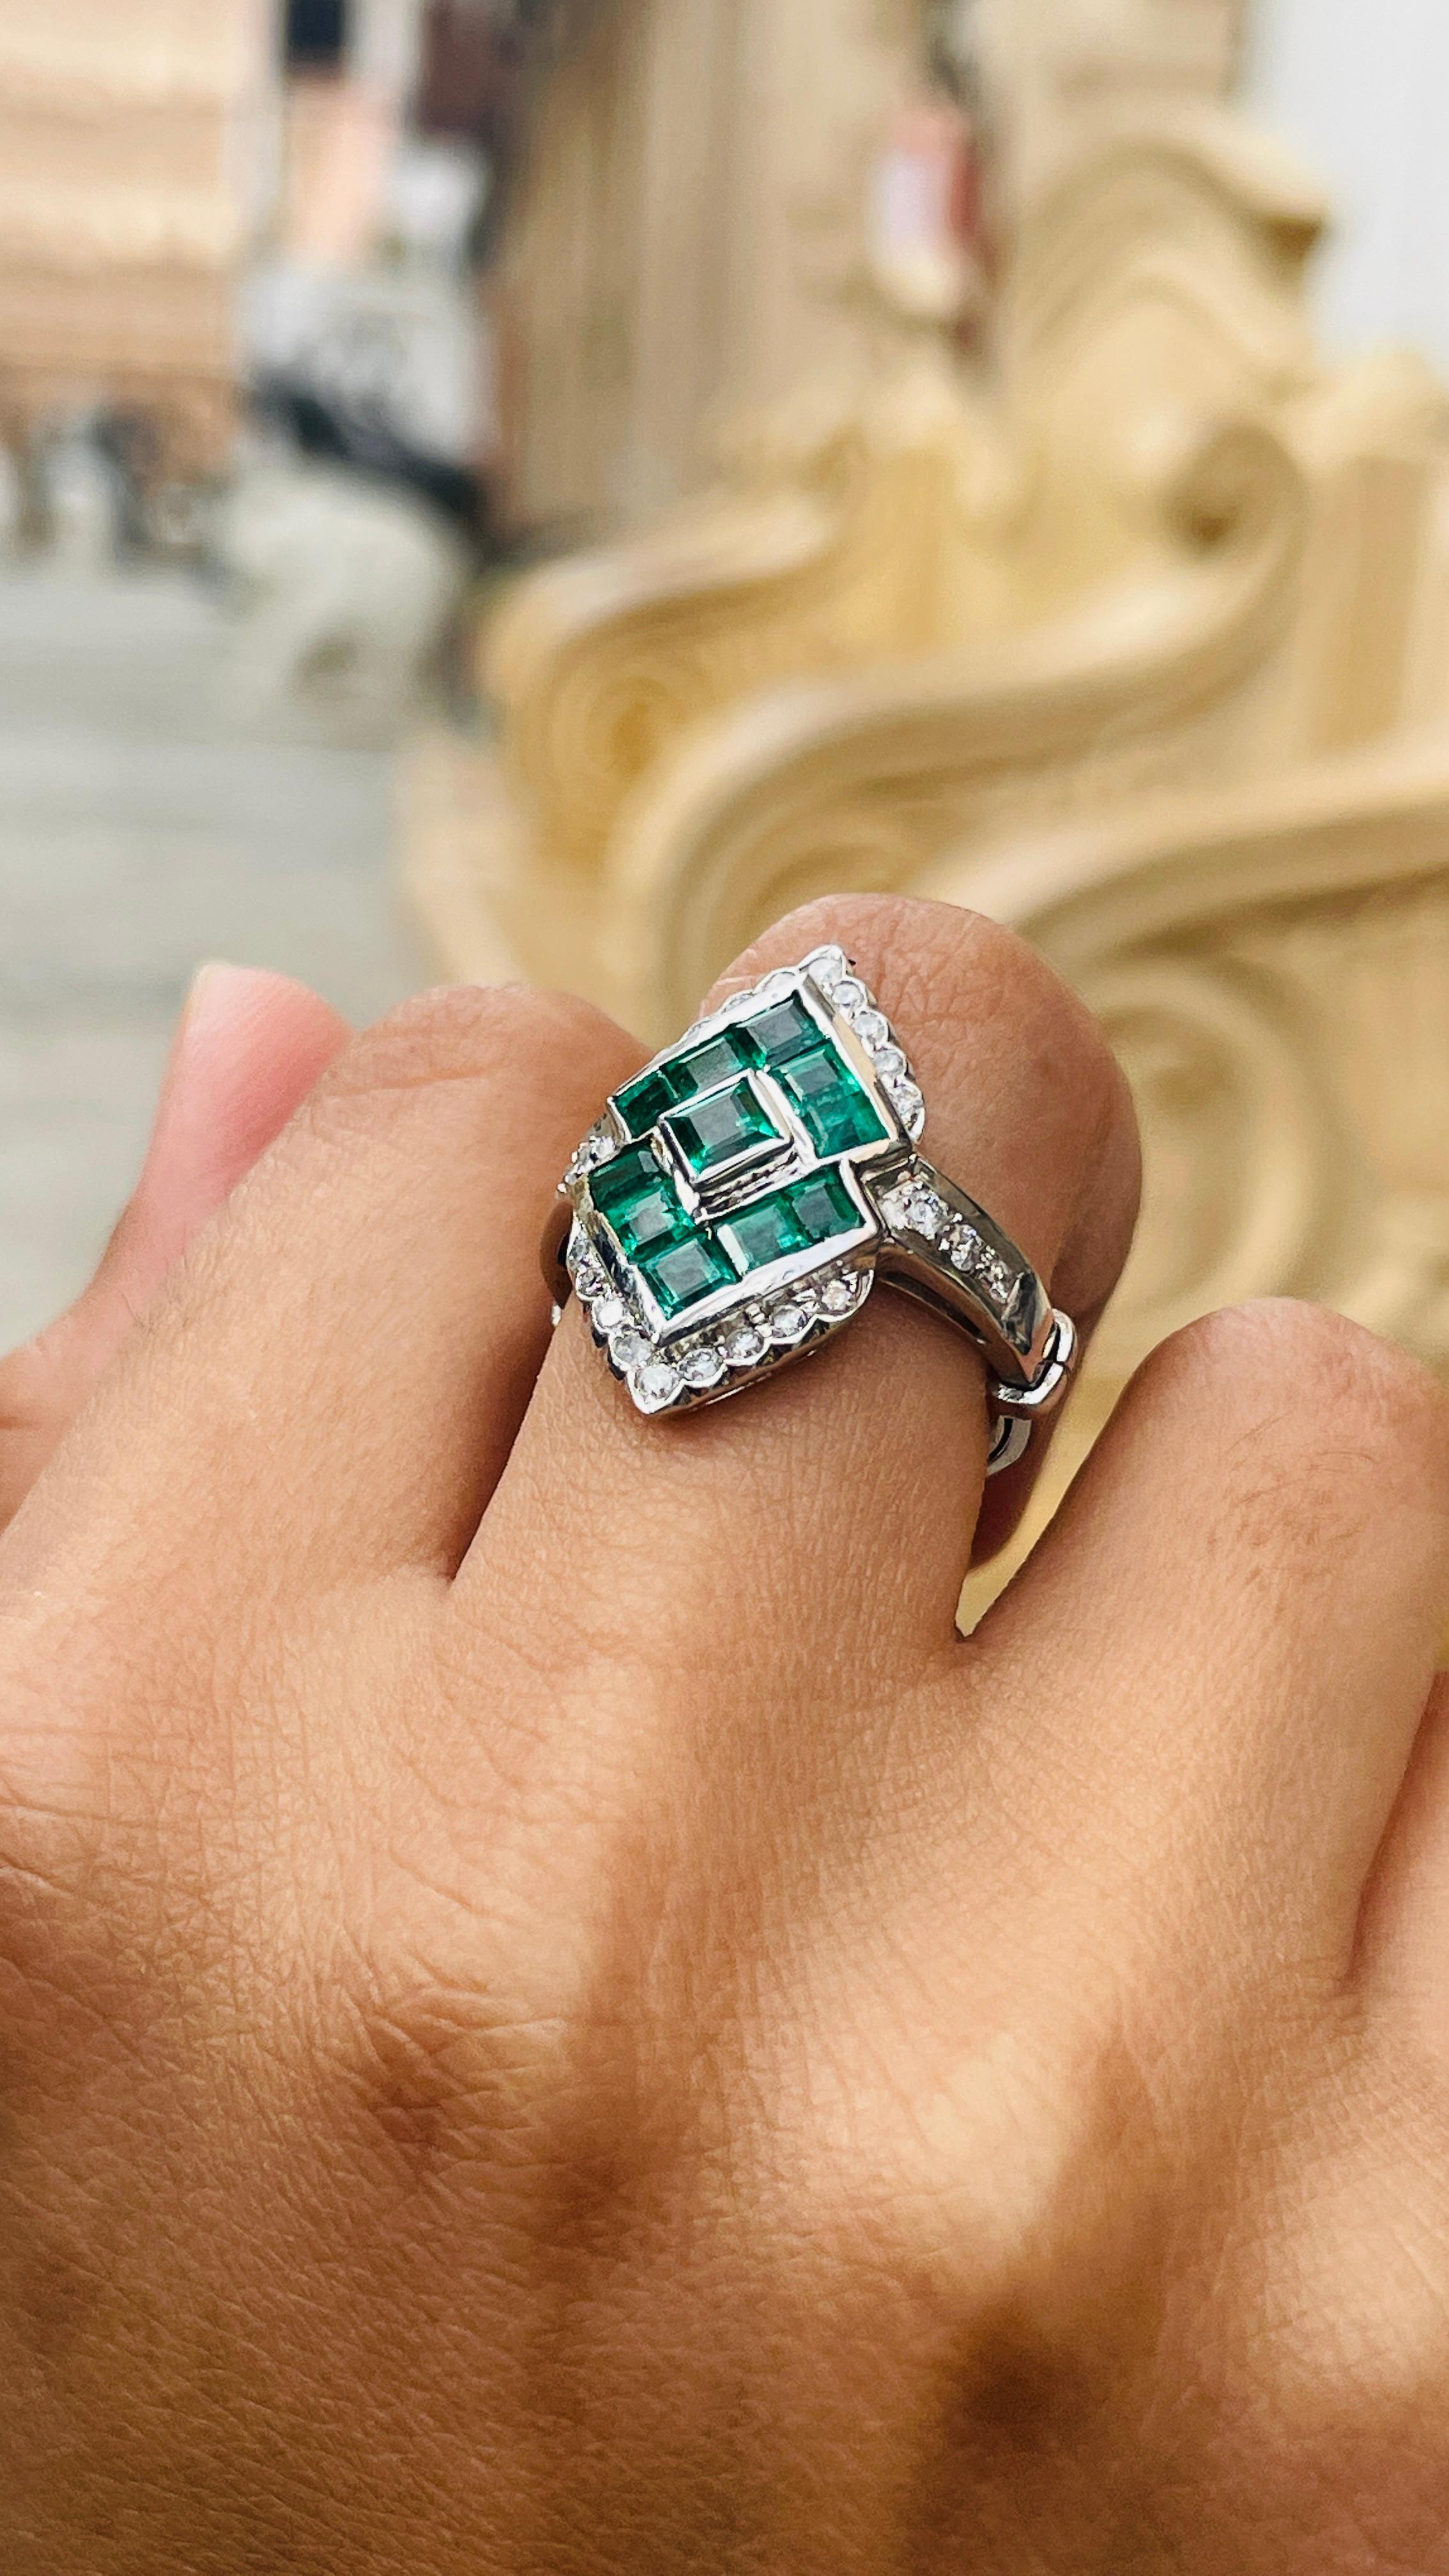 For Sale:  18k Solid White Gold Emerald Diamond Ring, Fine Emerald Ring 5